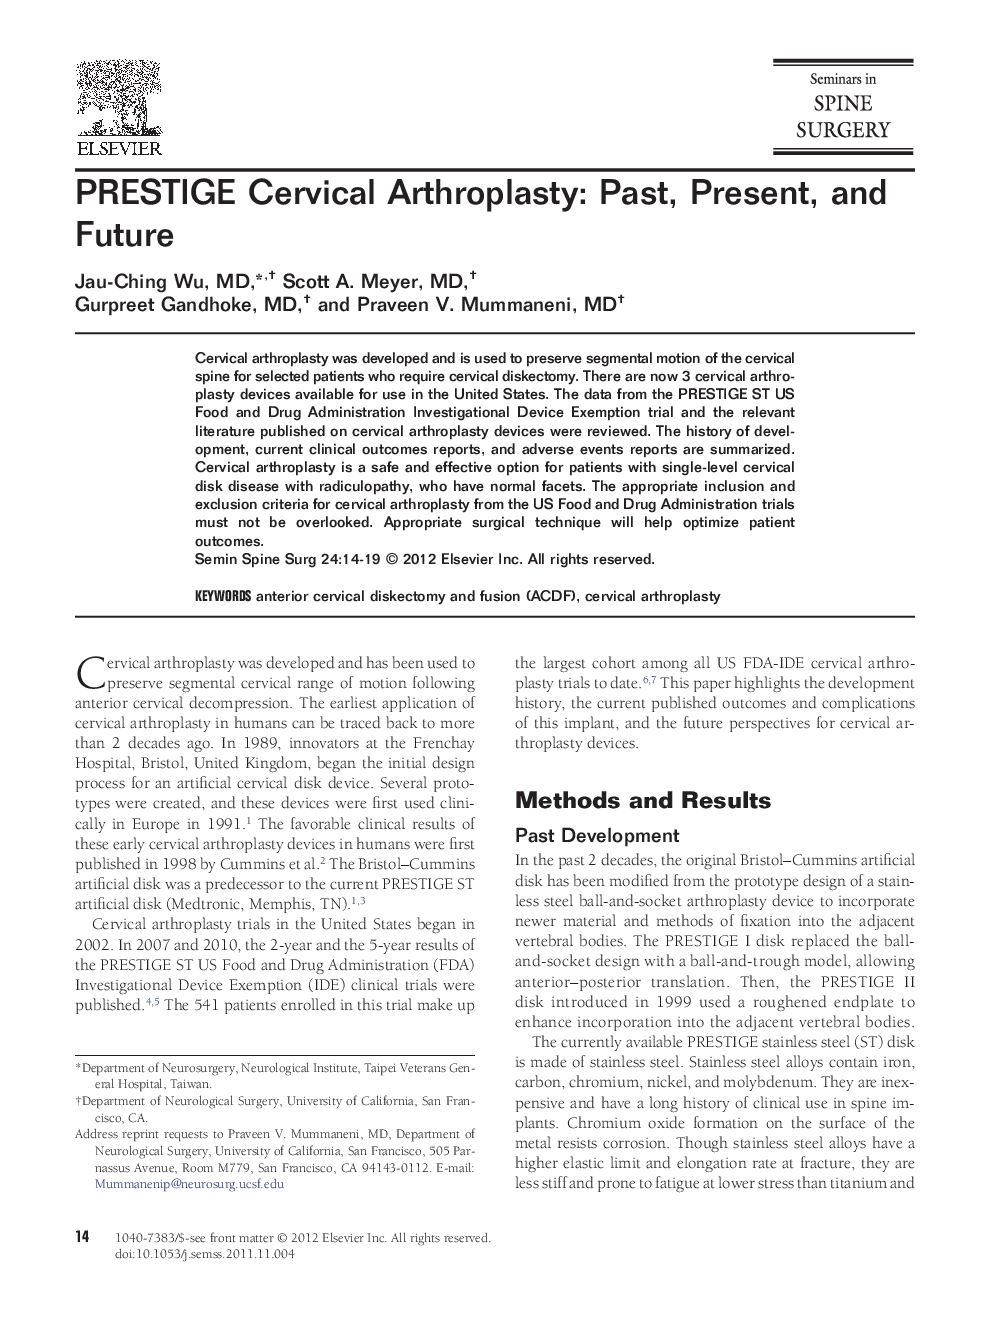 PRESTIGE Cervical Arthroplasty: Past, Present, and Future